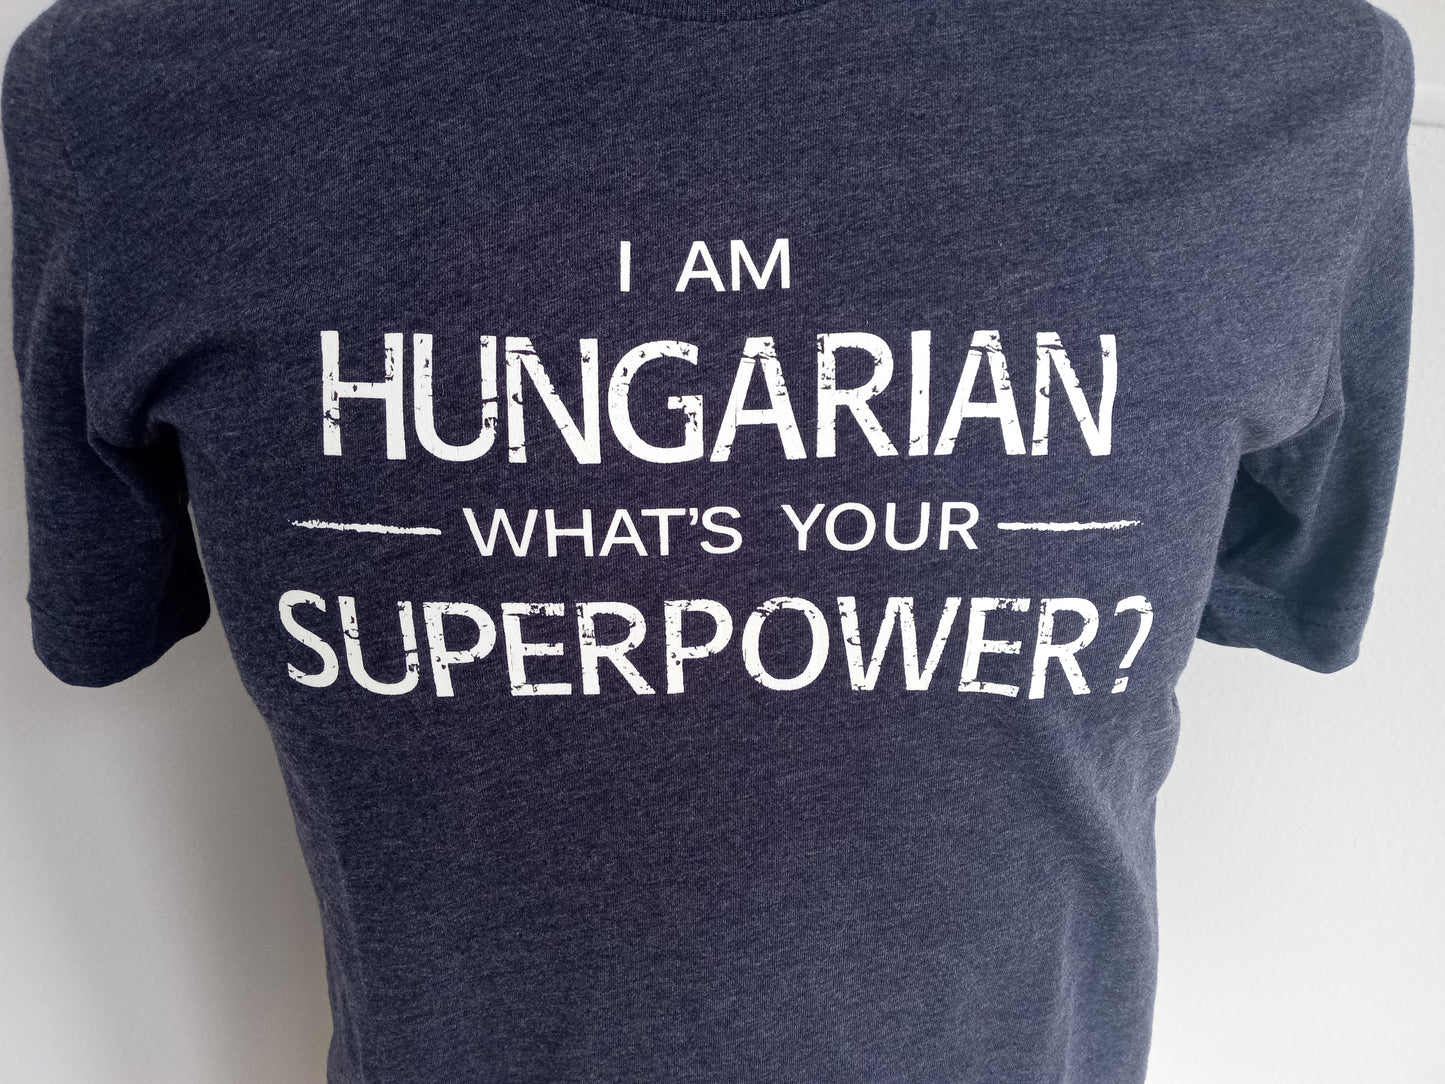 Hungarian Superpower